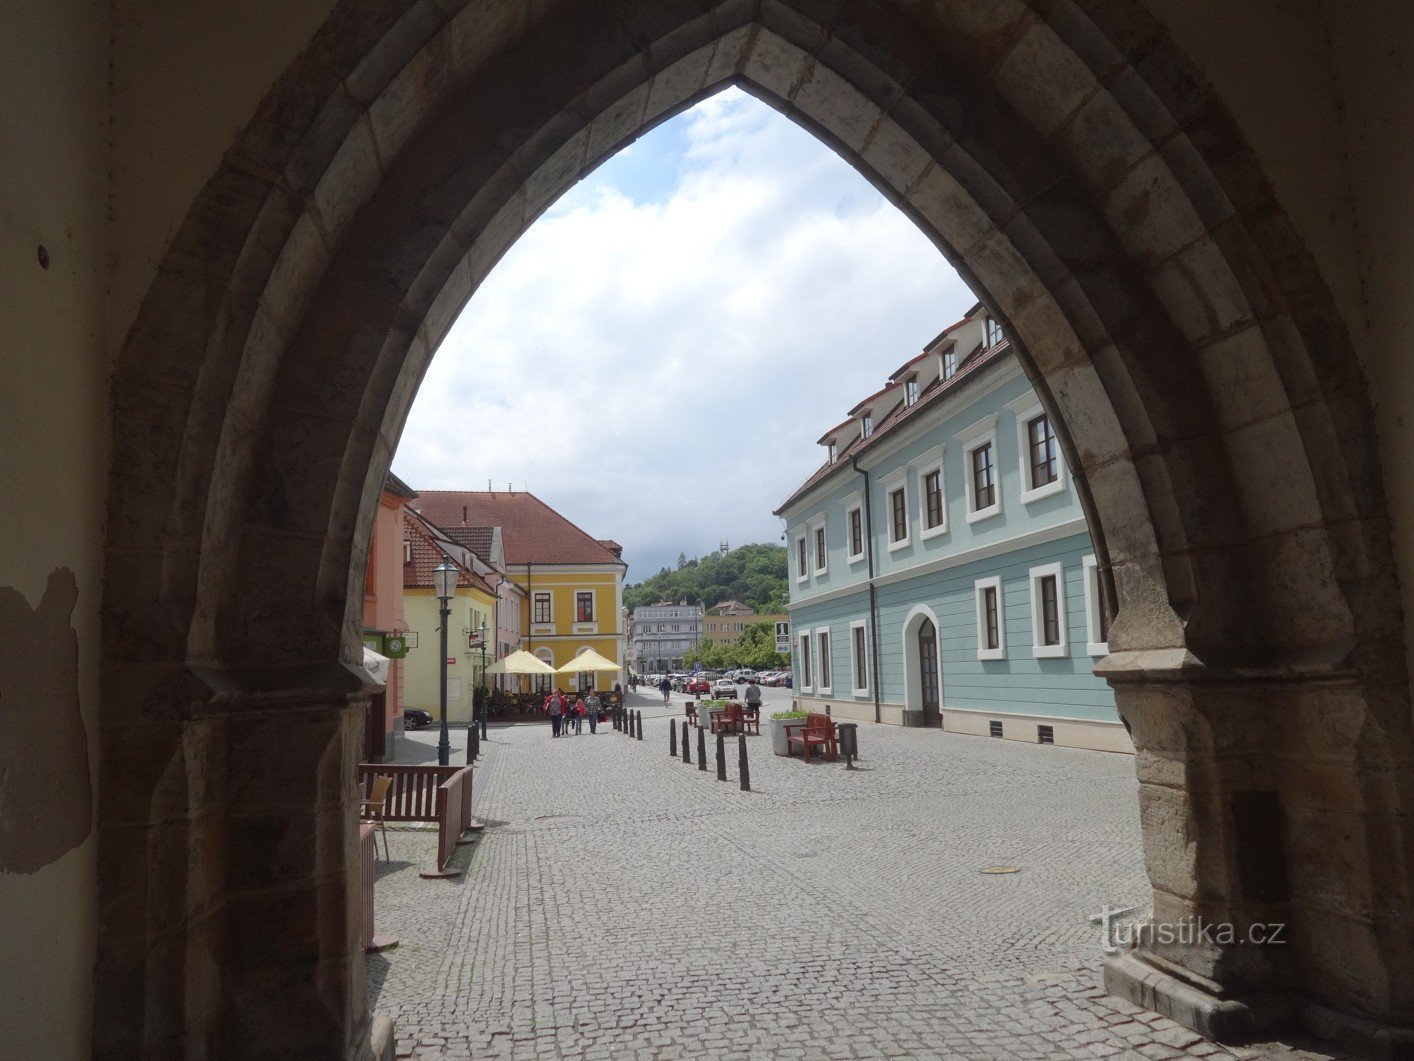 Beroun og Prag-porten under Husový náměstí